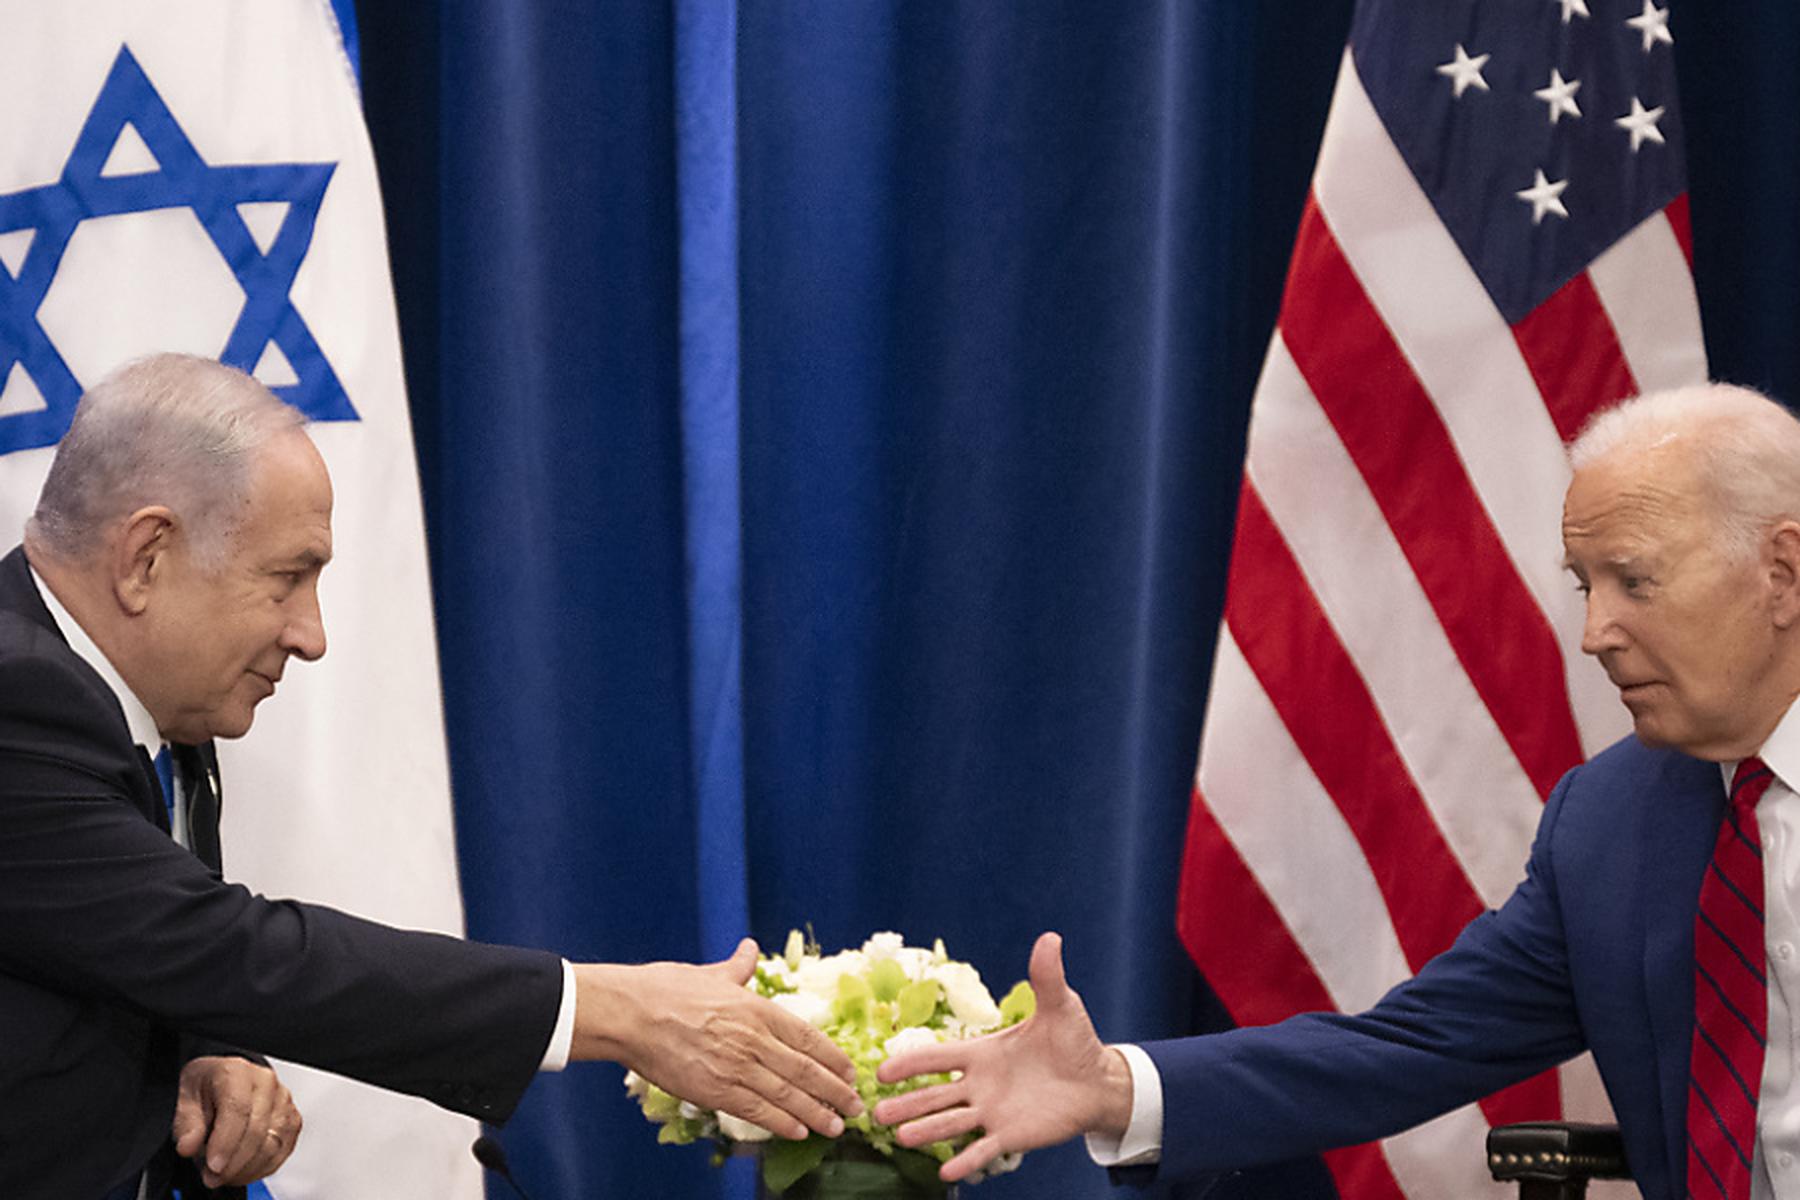 Washington/Jerusalem: Biden spricht in Telefonat Warnung an Netanyahu aus